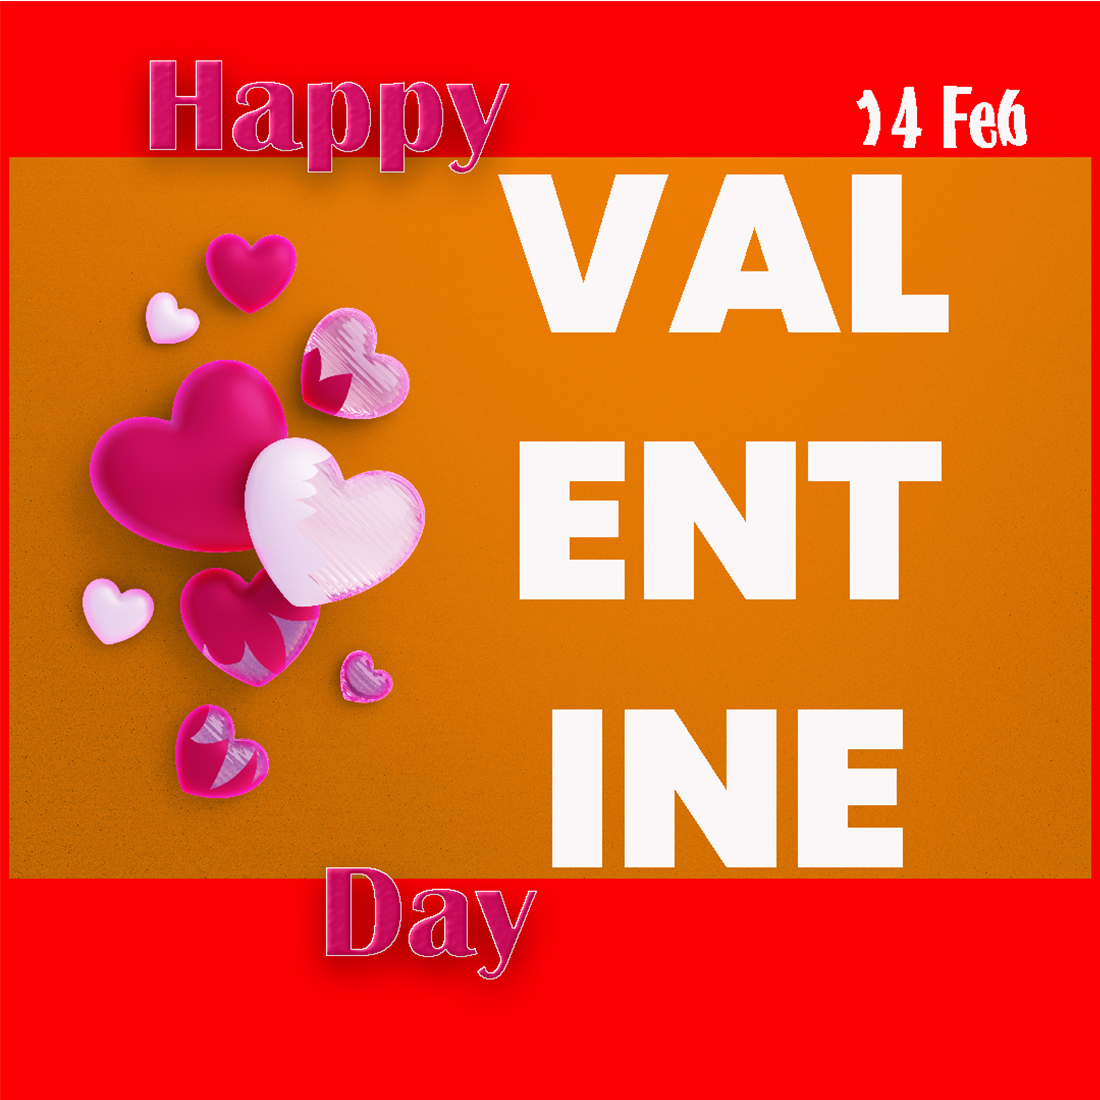 14 Feb International Valentine day preview image.